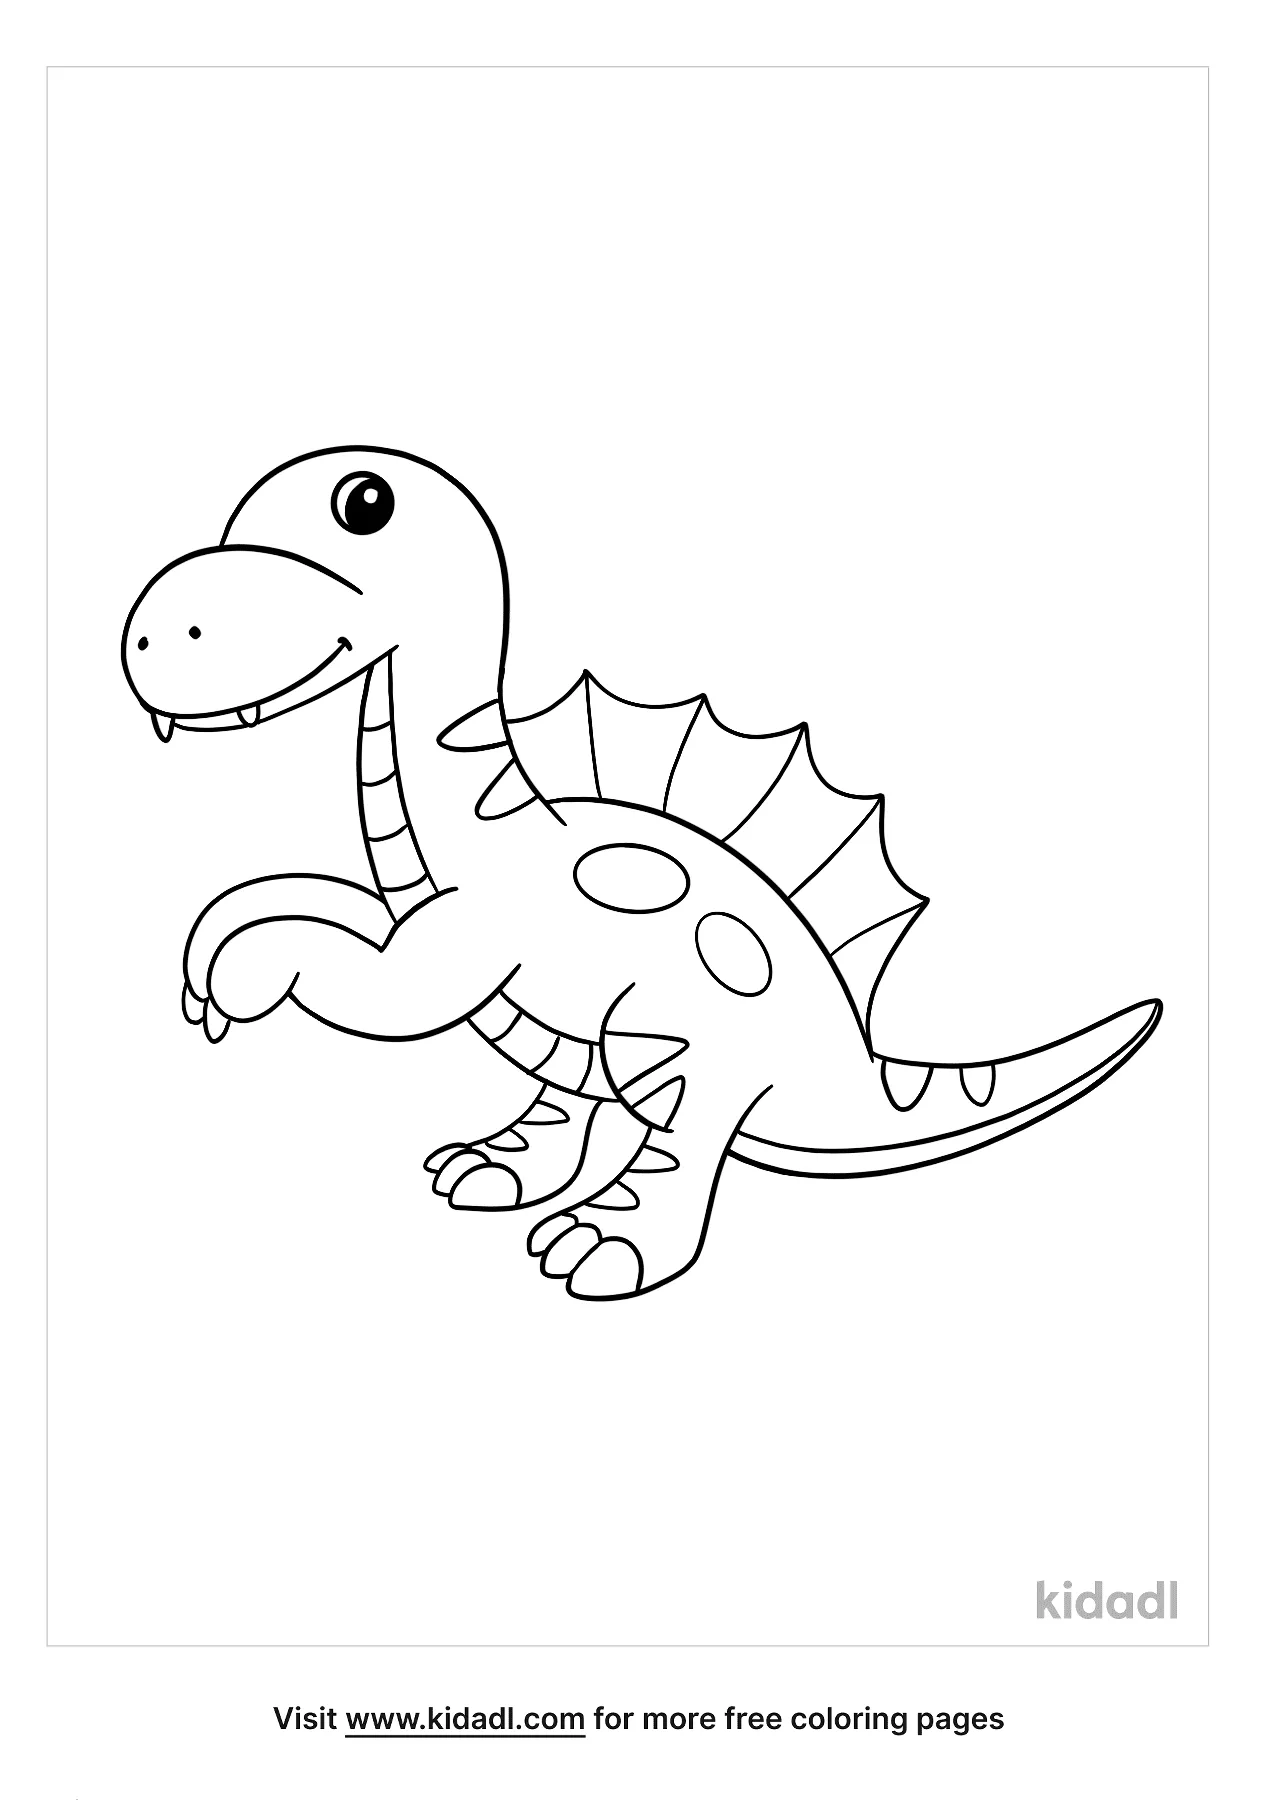 Baby Spinosaurus Coloring Page